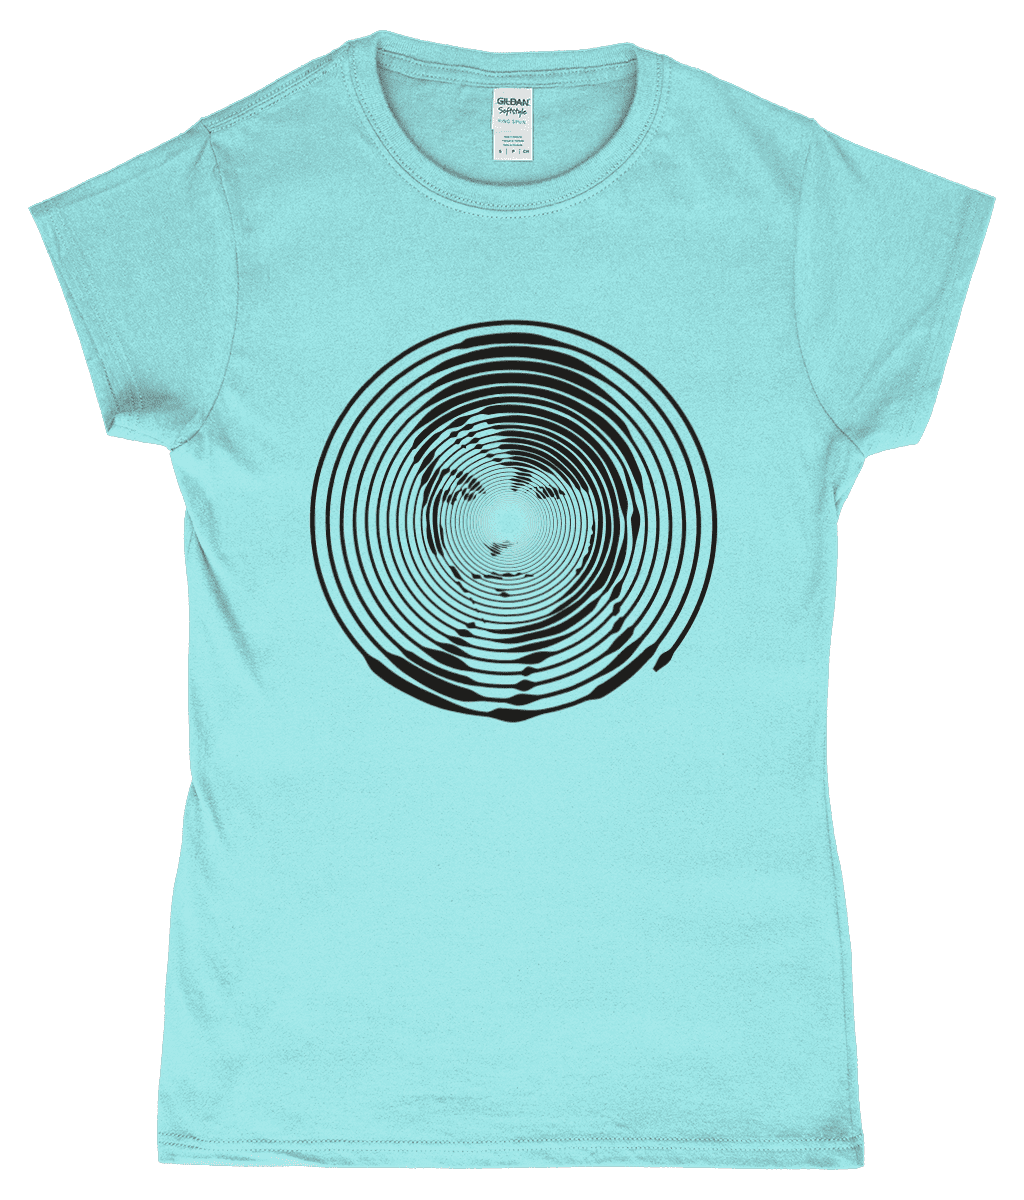 Paul McCartney Vinyl Record T-Shirt Design Light Blue